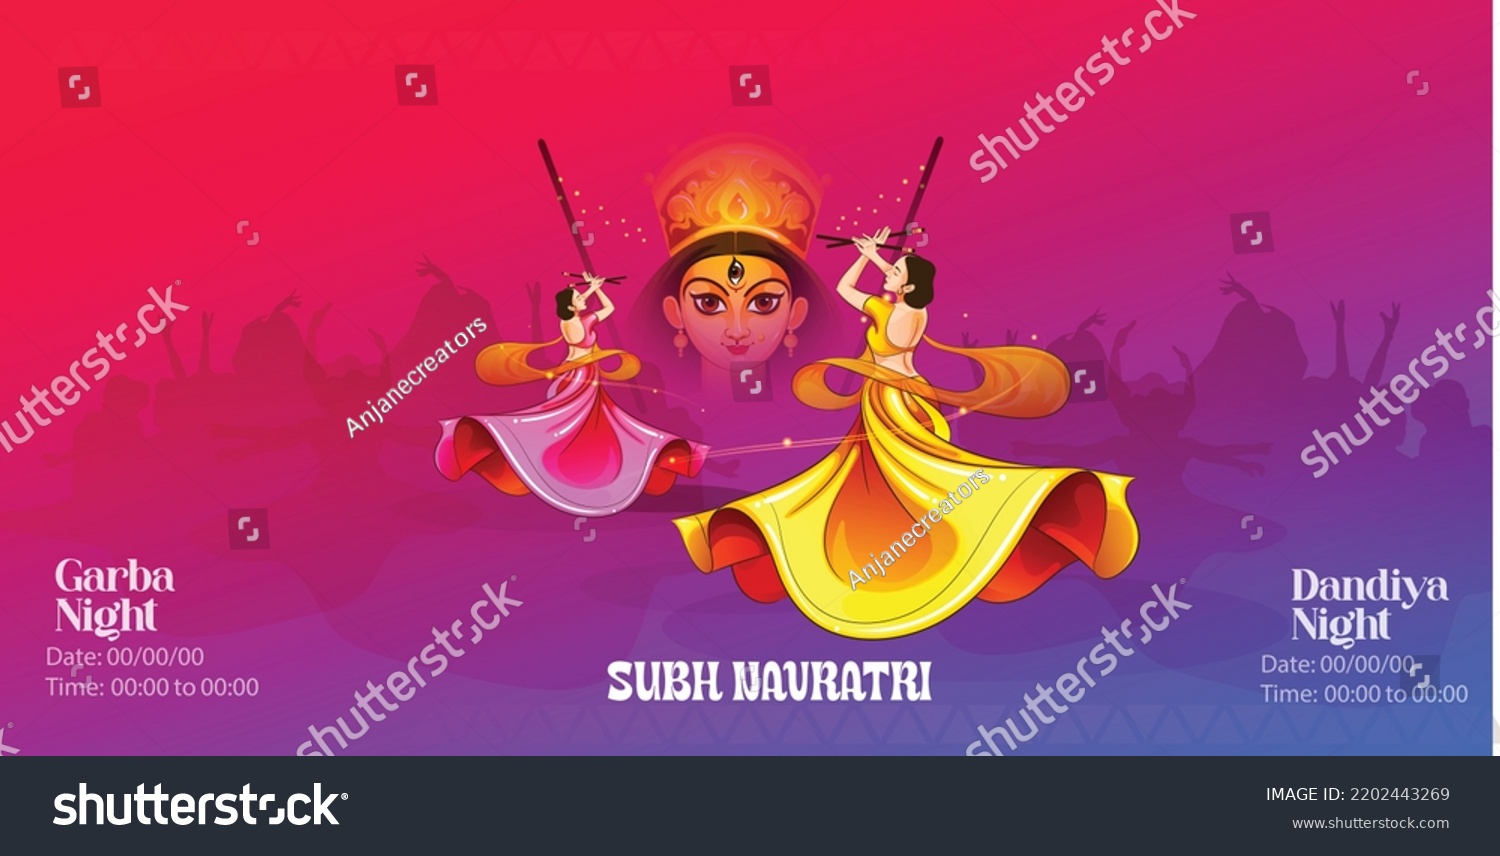 SVG of Creative illustration for Dandiya and Garba night, Happy Navratri wishes svg